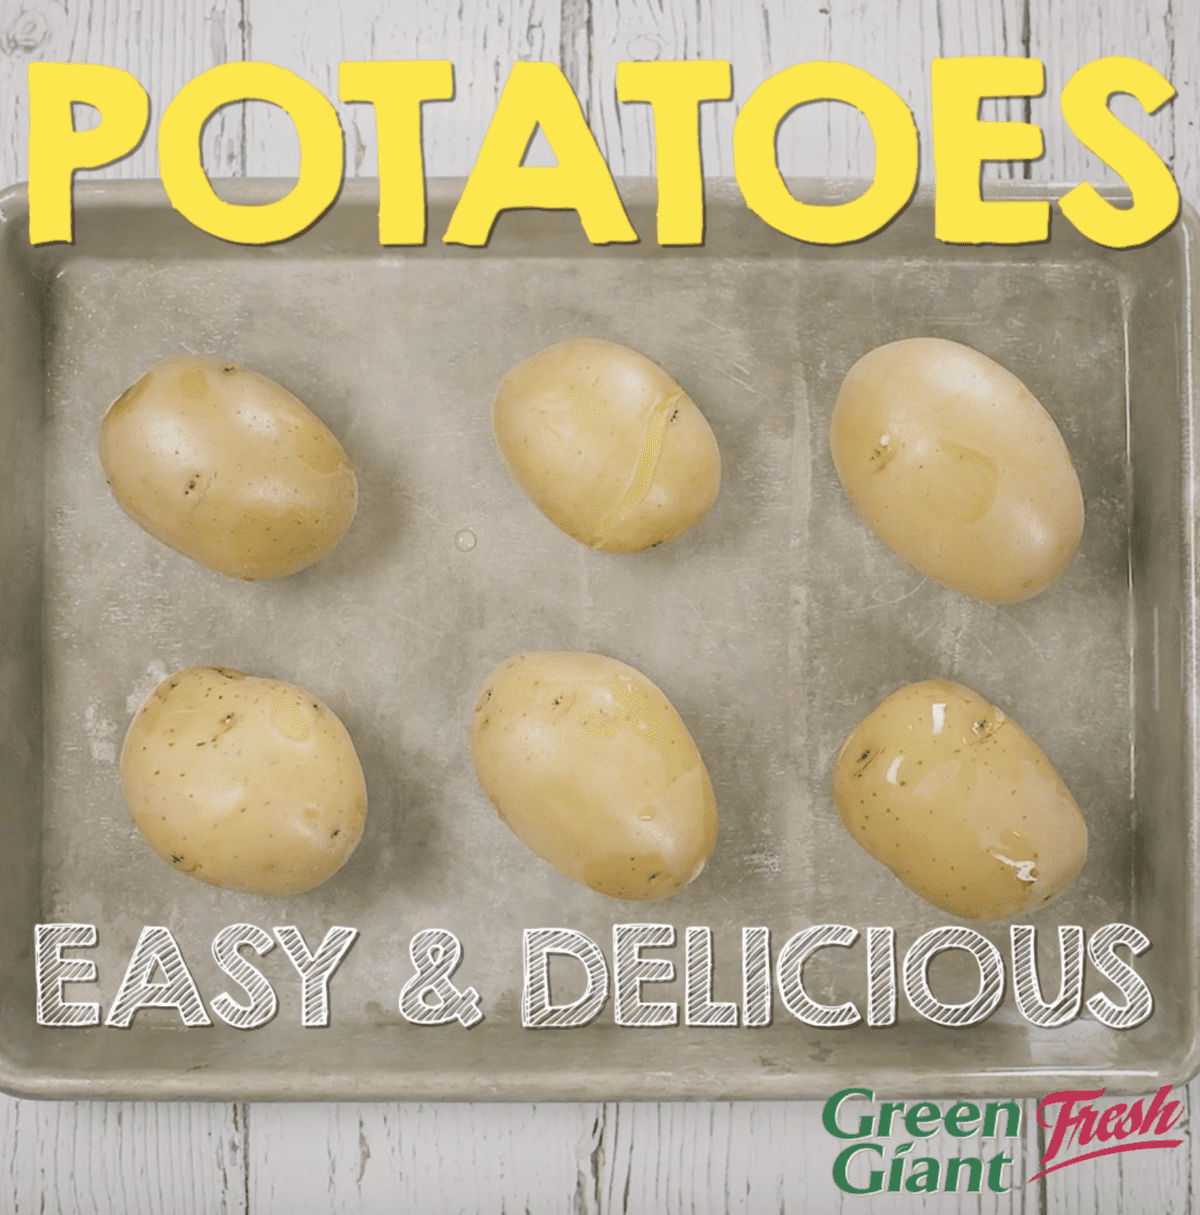 Green Giant™ Fresh Potatoes: Easy & Delicious